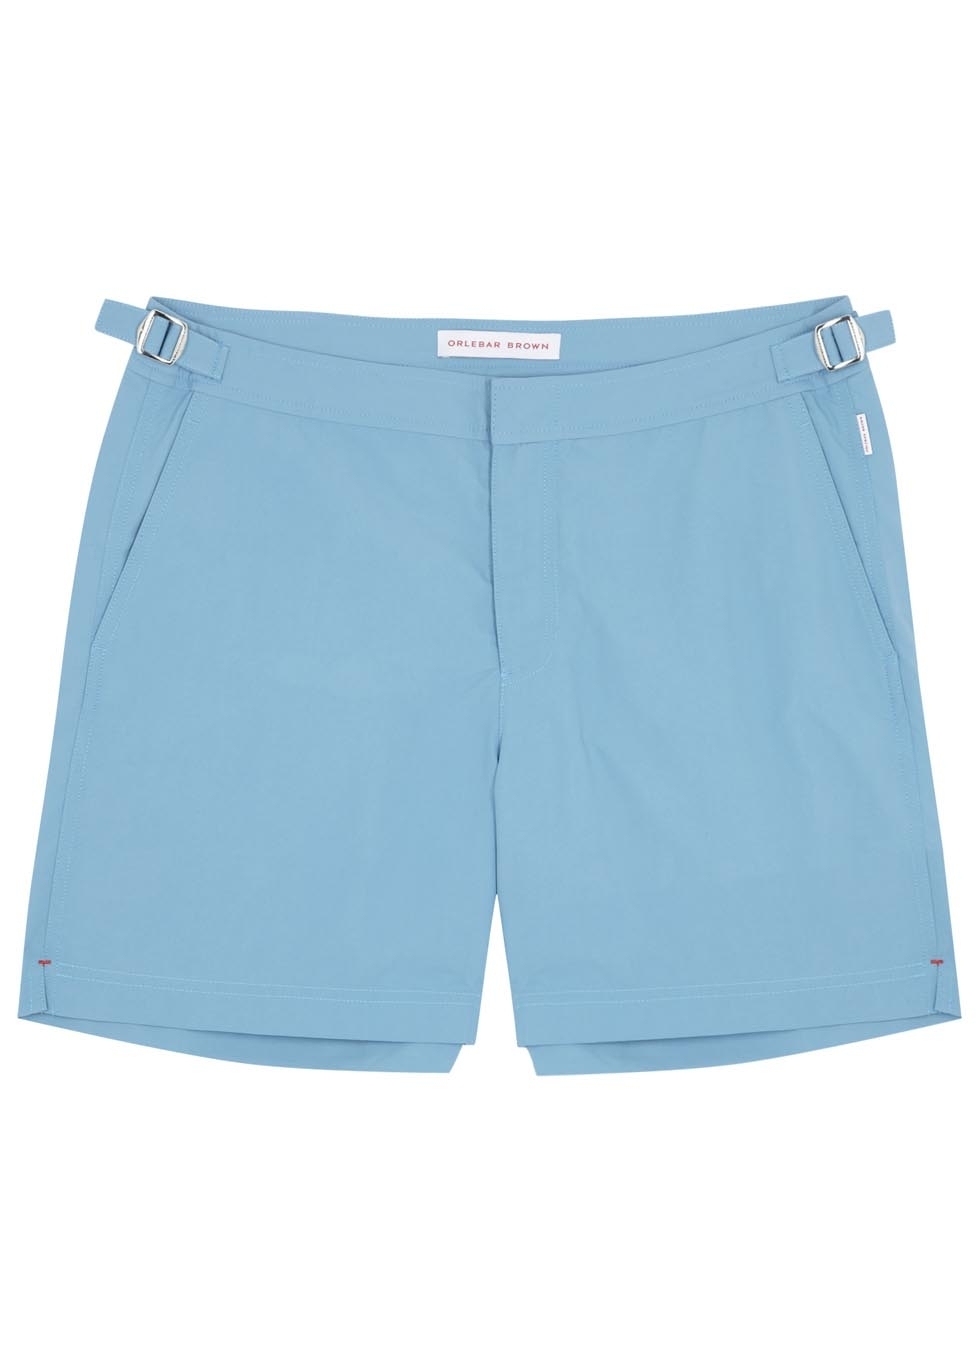 Bulldog blue swim shorts